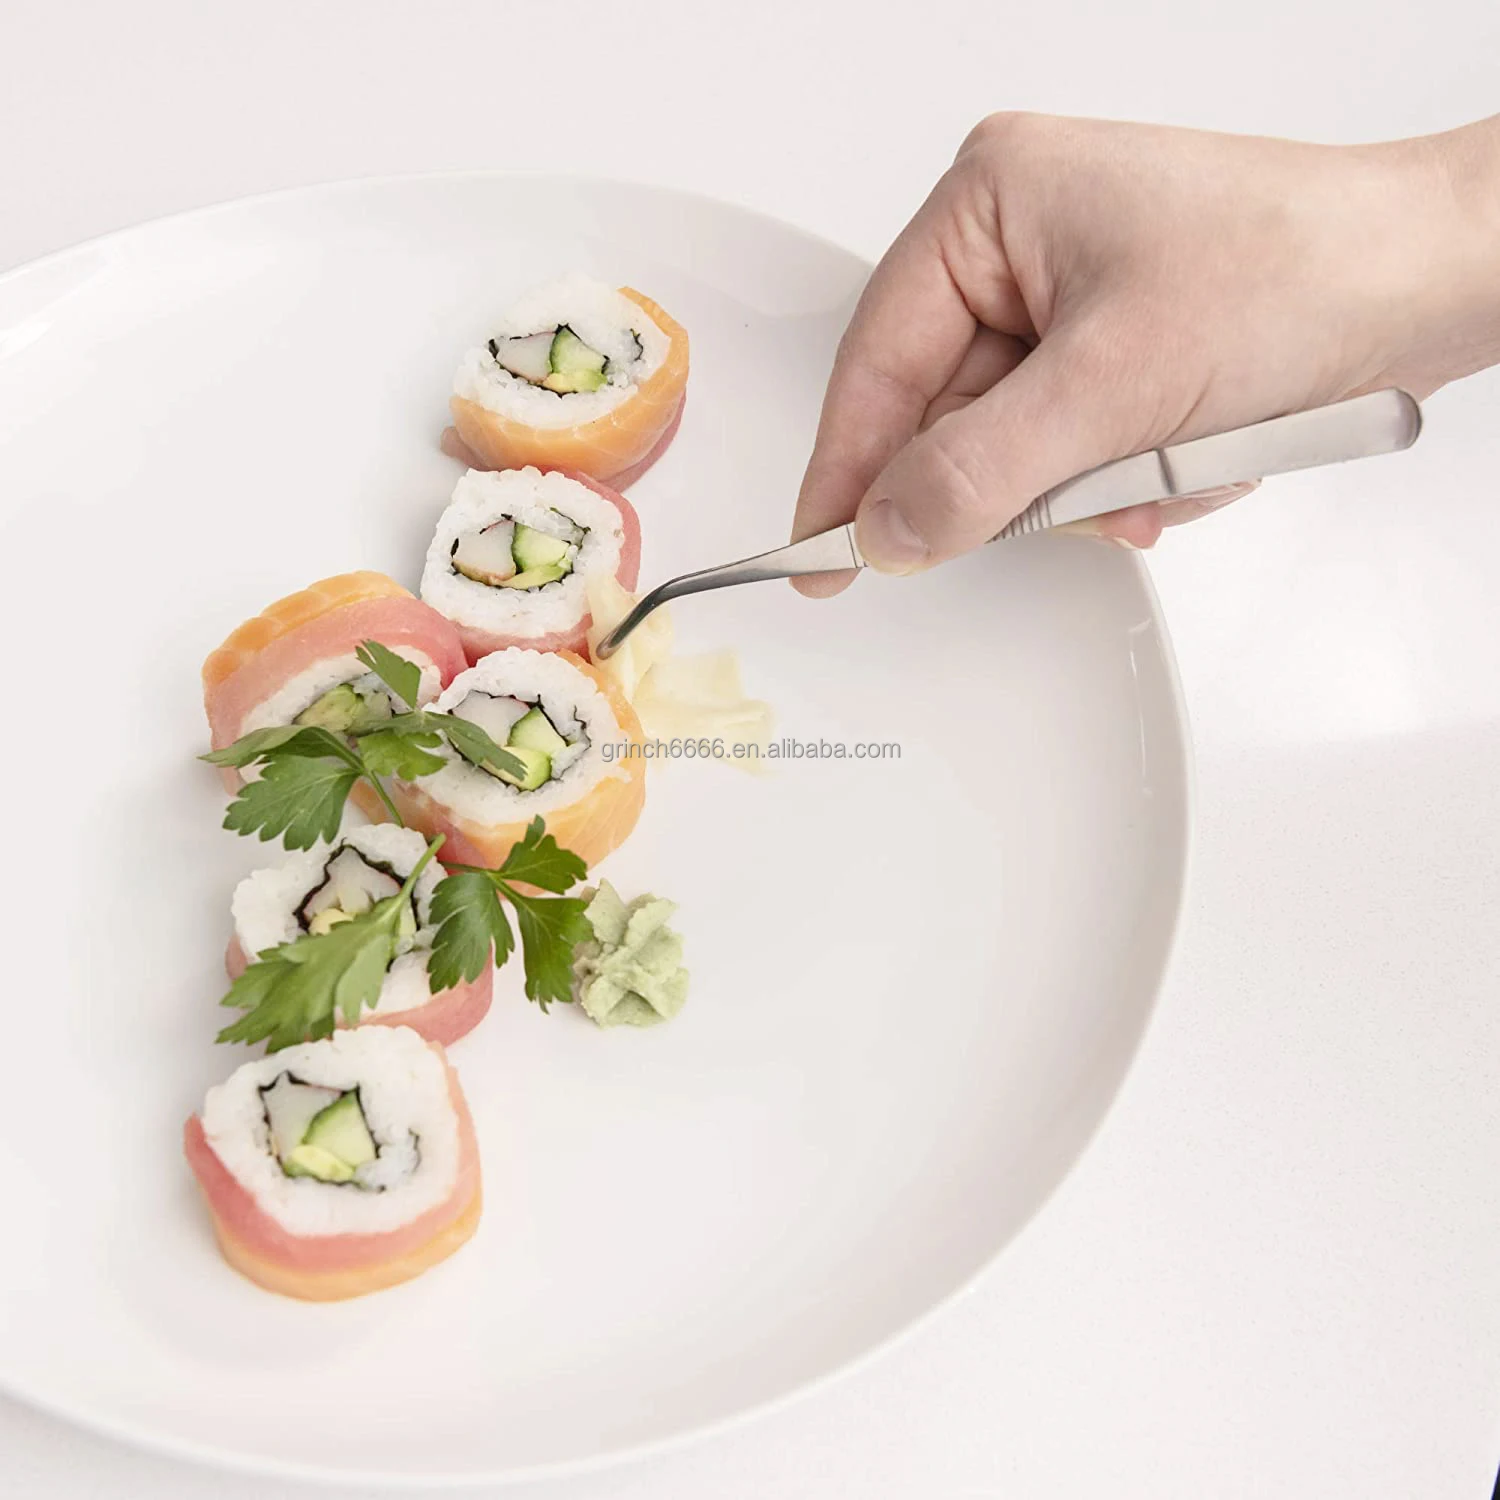 Yioeecf Plating Tools Kit，Culinary Professional Chef Plating Set，1